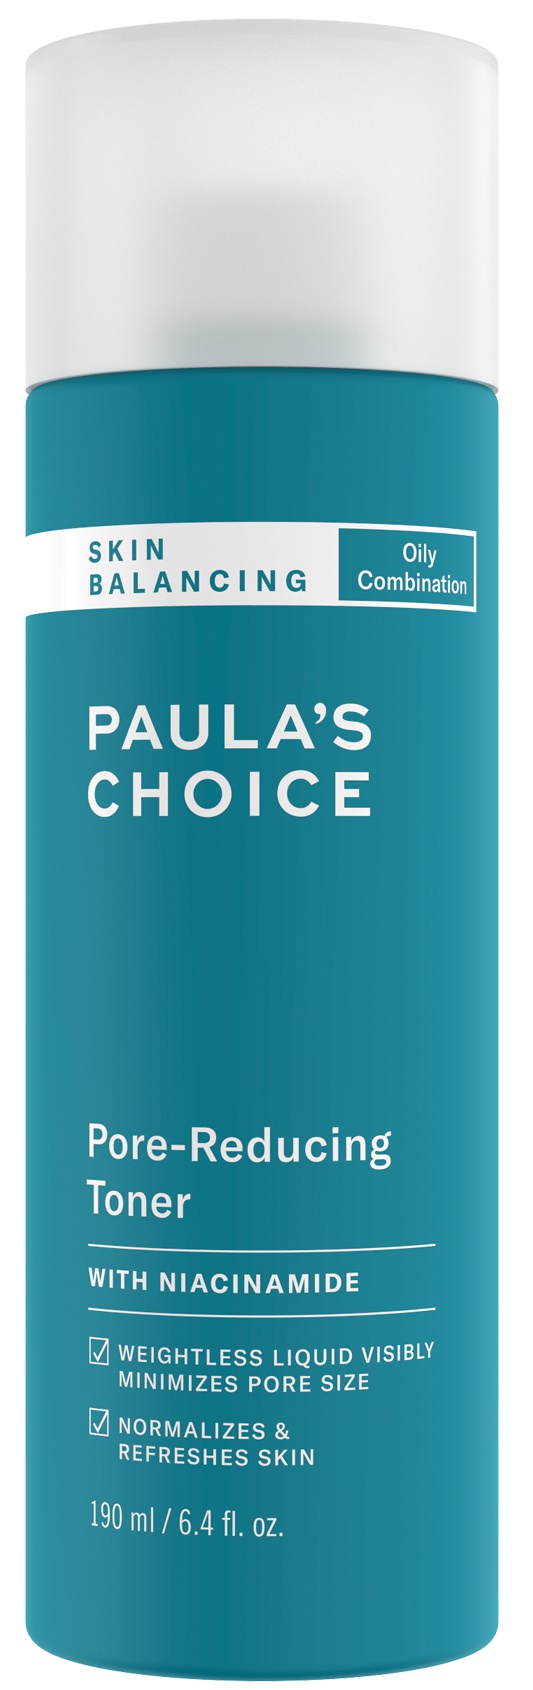 Paula's Choice Pore-reducing Toner